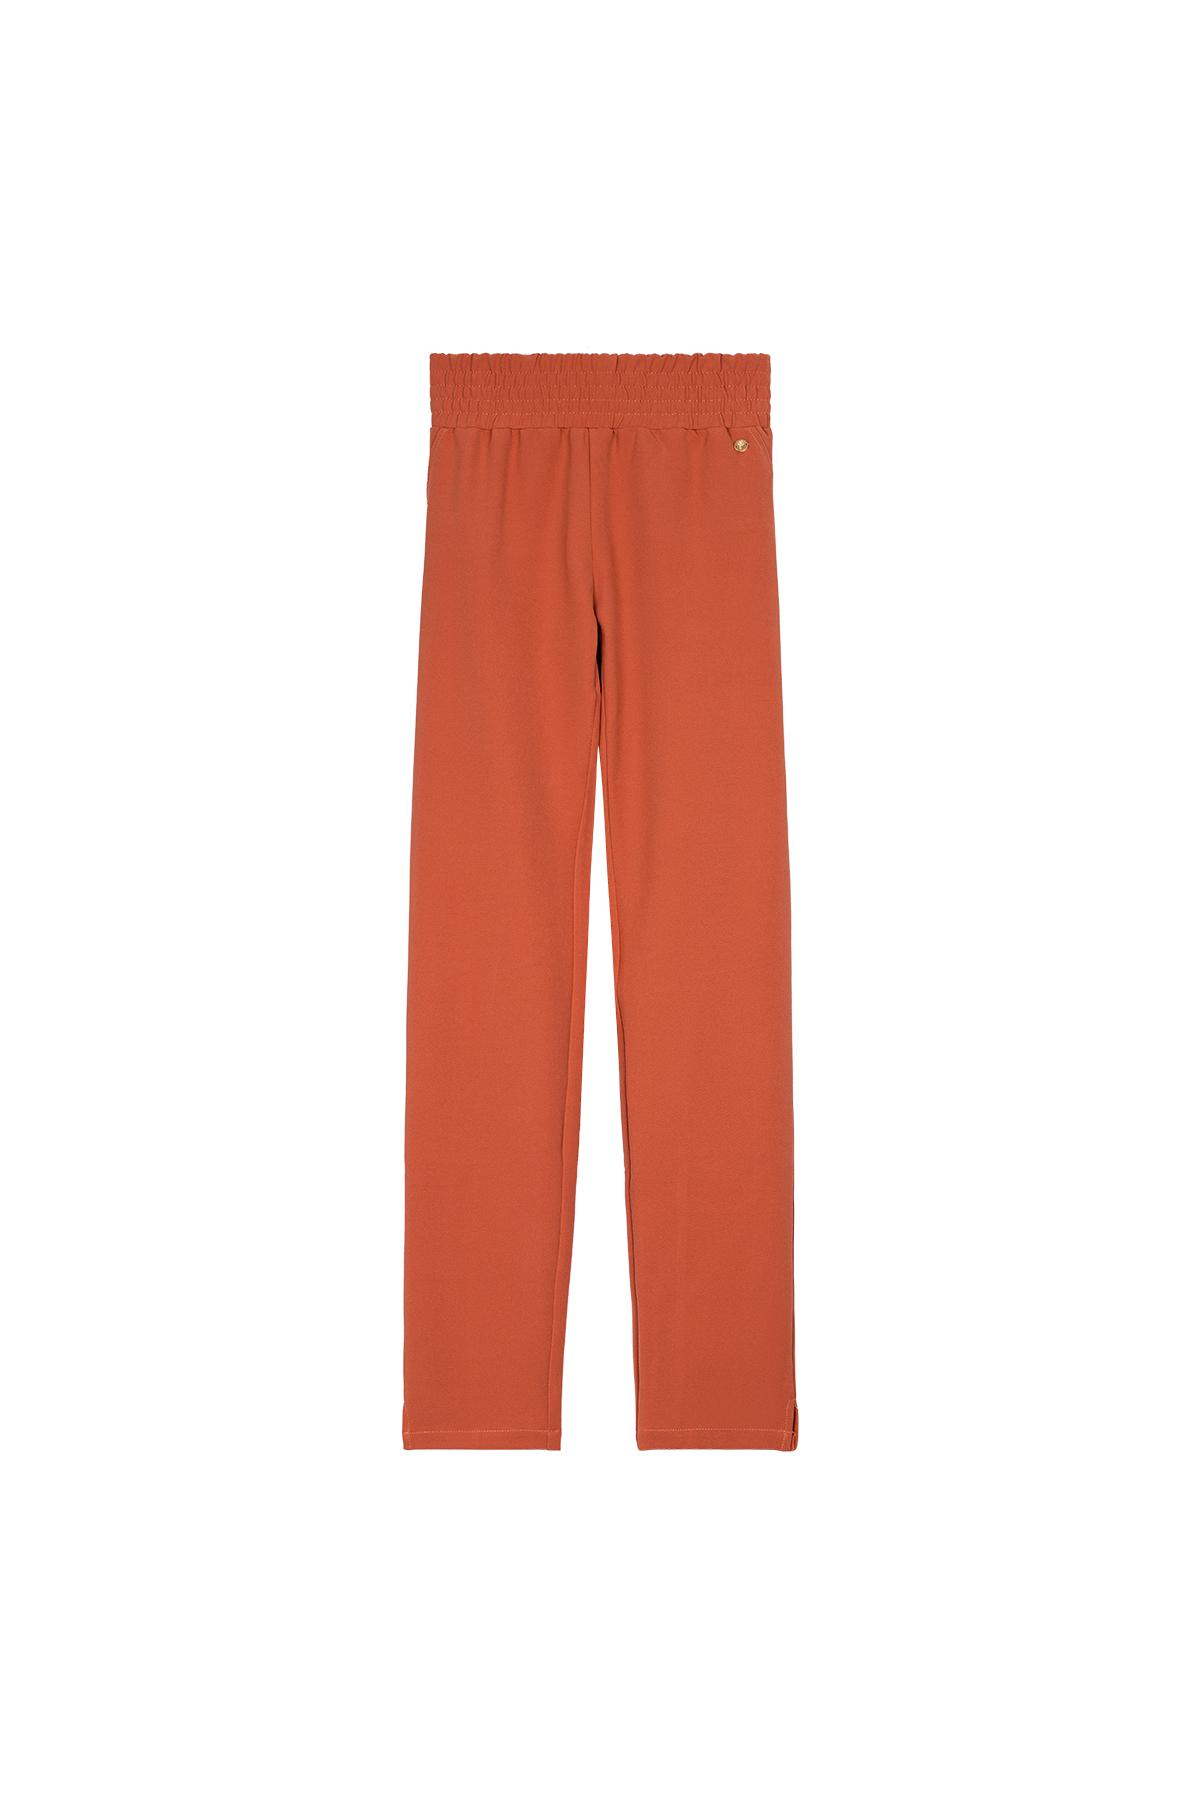 Pantalon coupe slim Orange S h5 